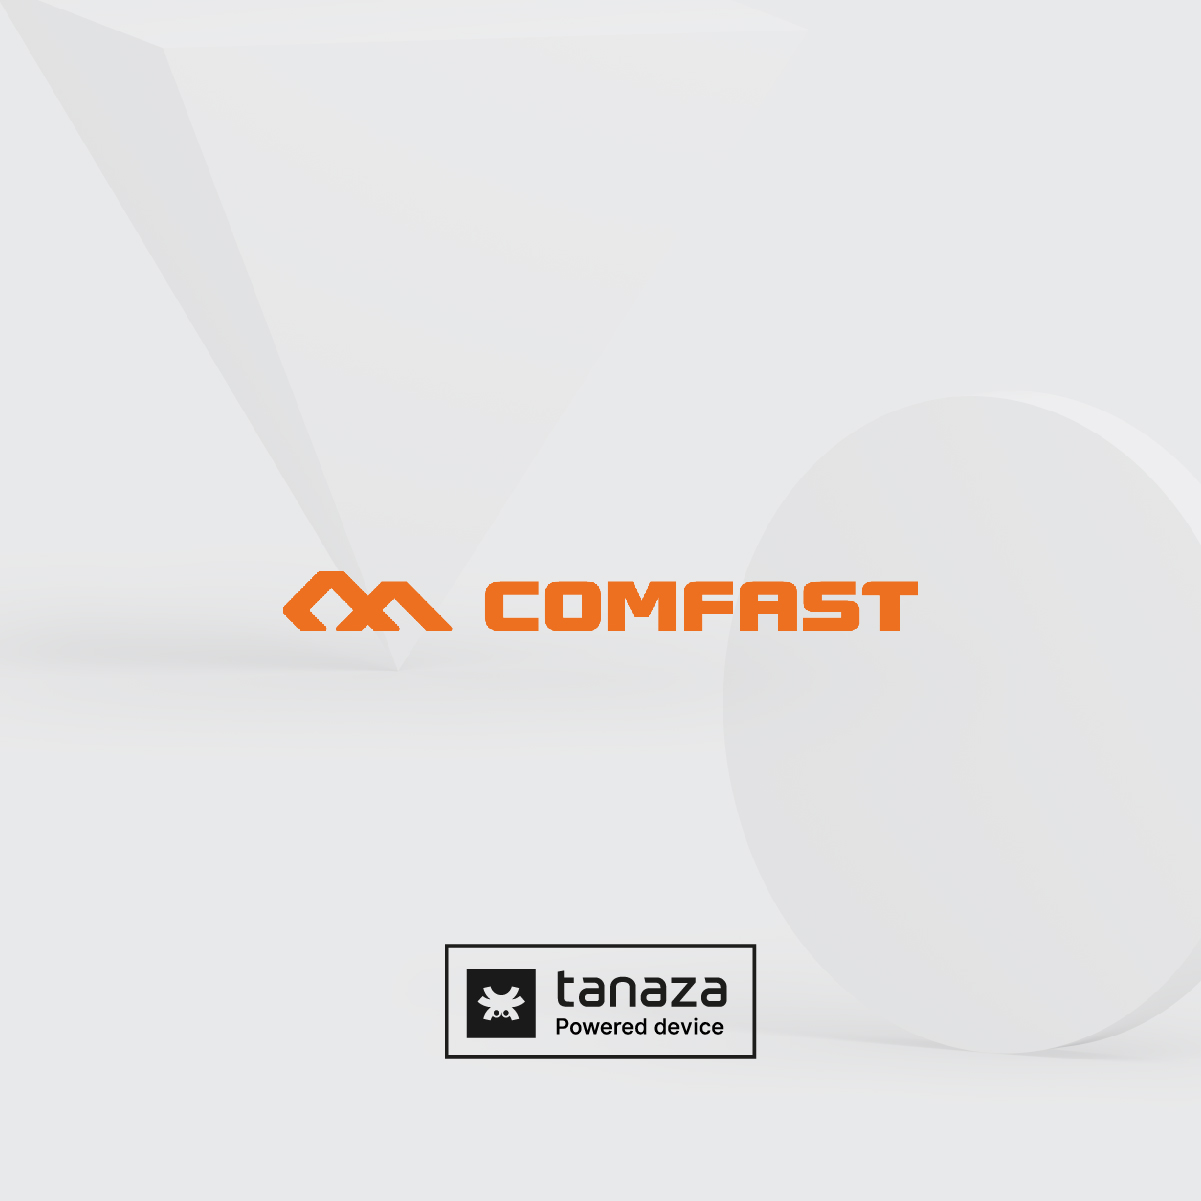 Tanaza and Comfast partnership